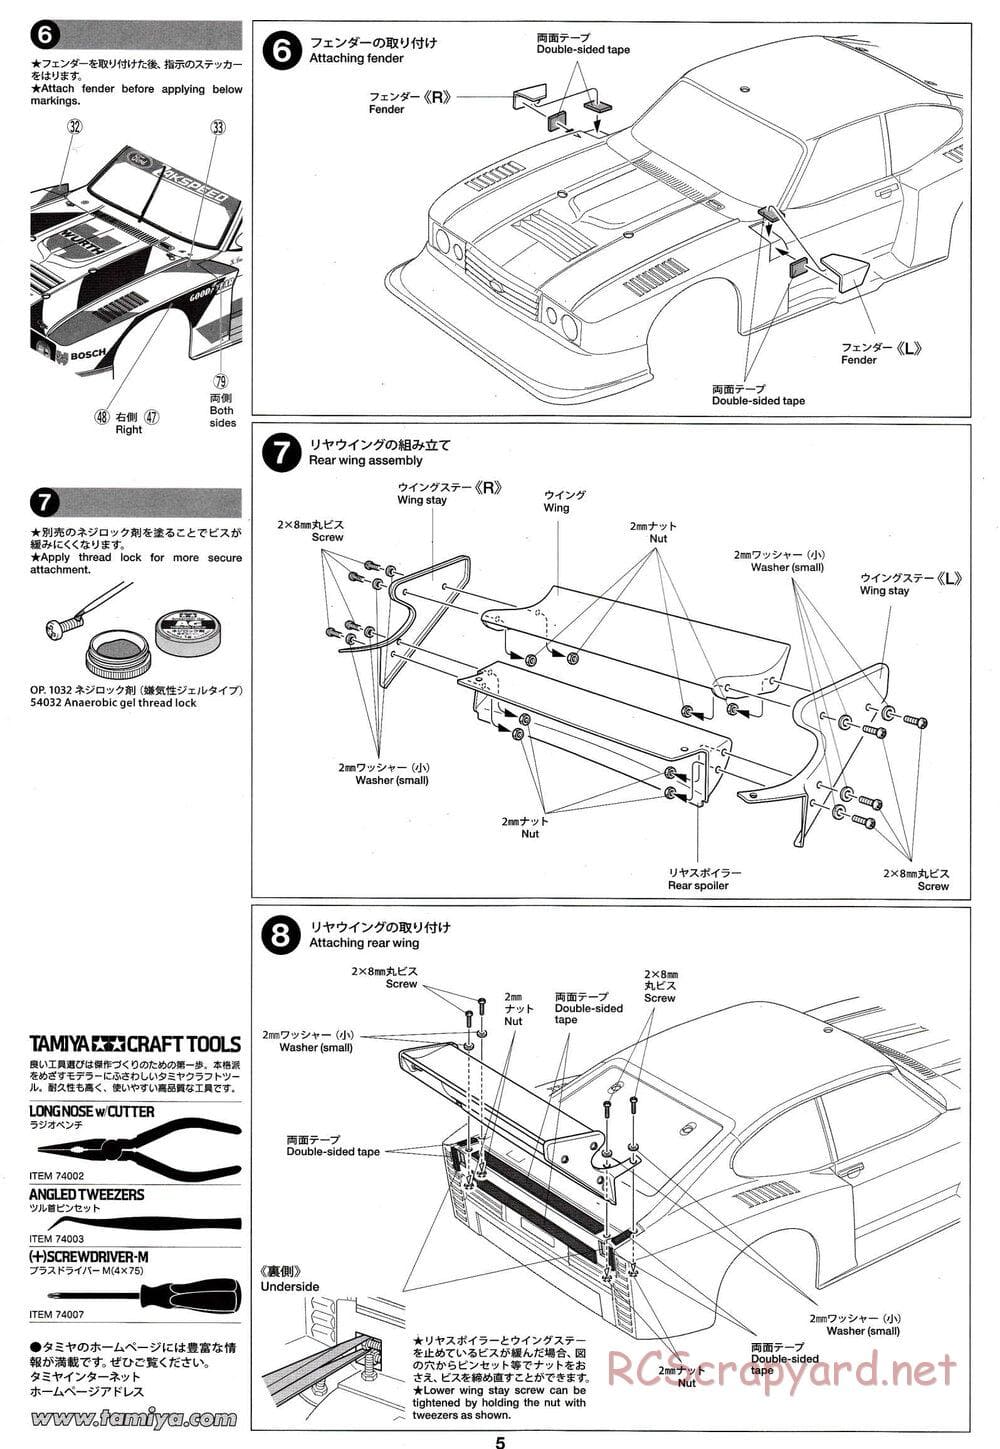 Tamiya - Ford Zakspeed Turbo Capri Gr.5 Wurth - TT-02 Chassis - Body Manual - Page 5